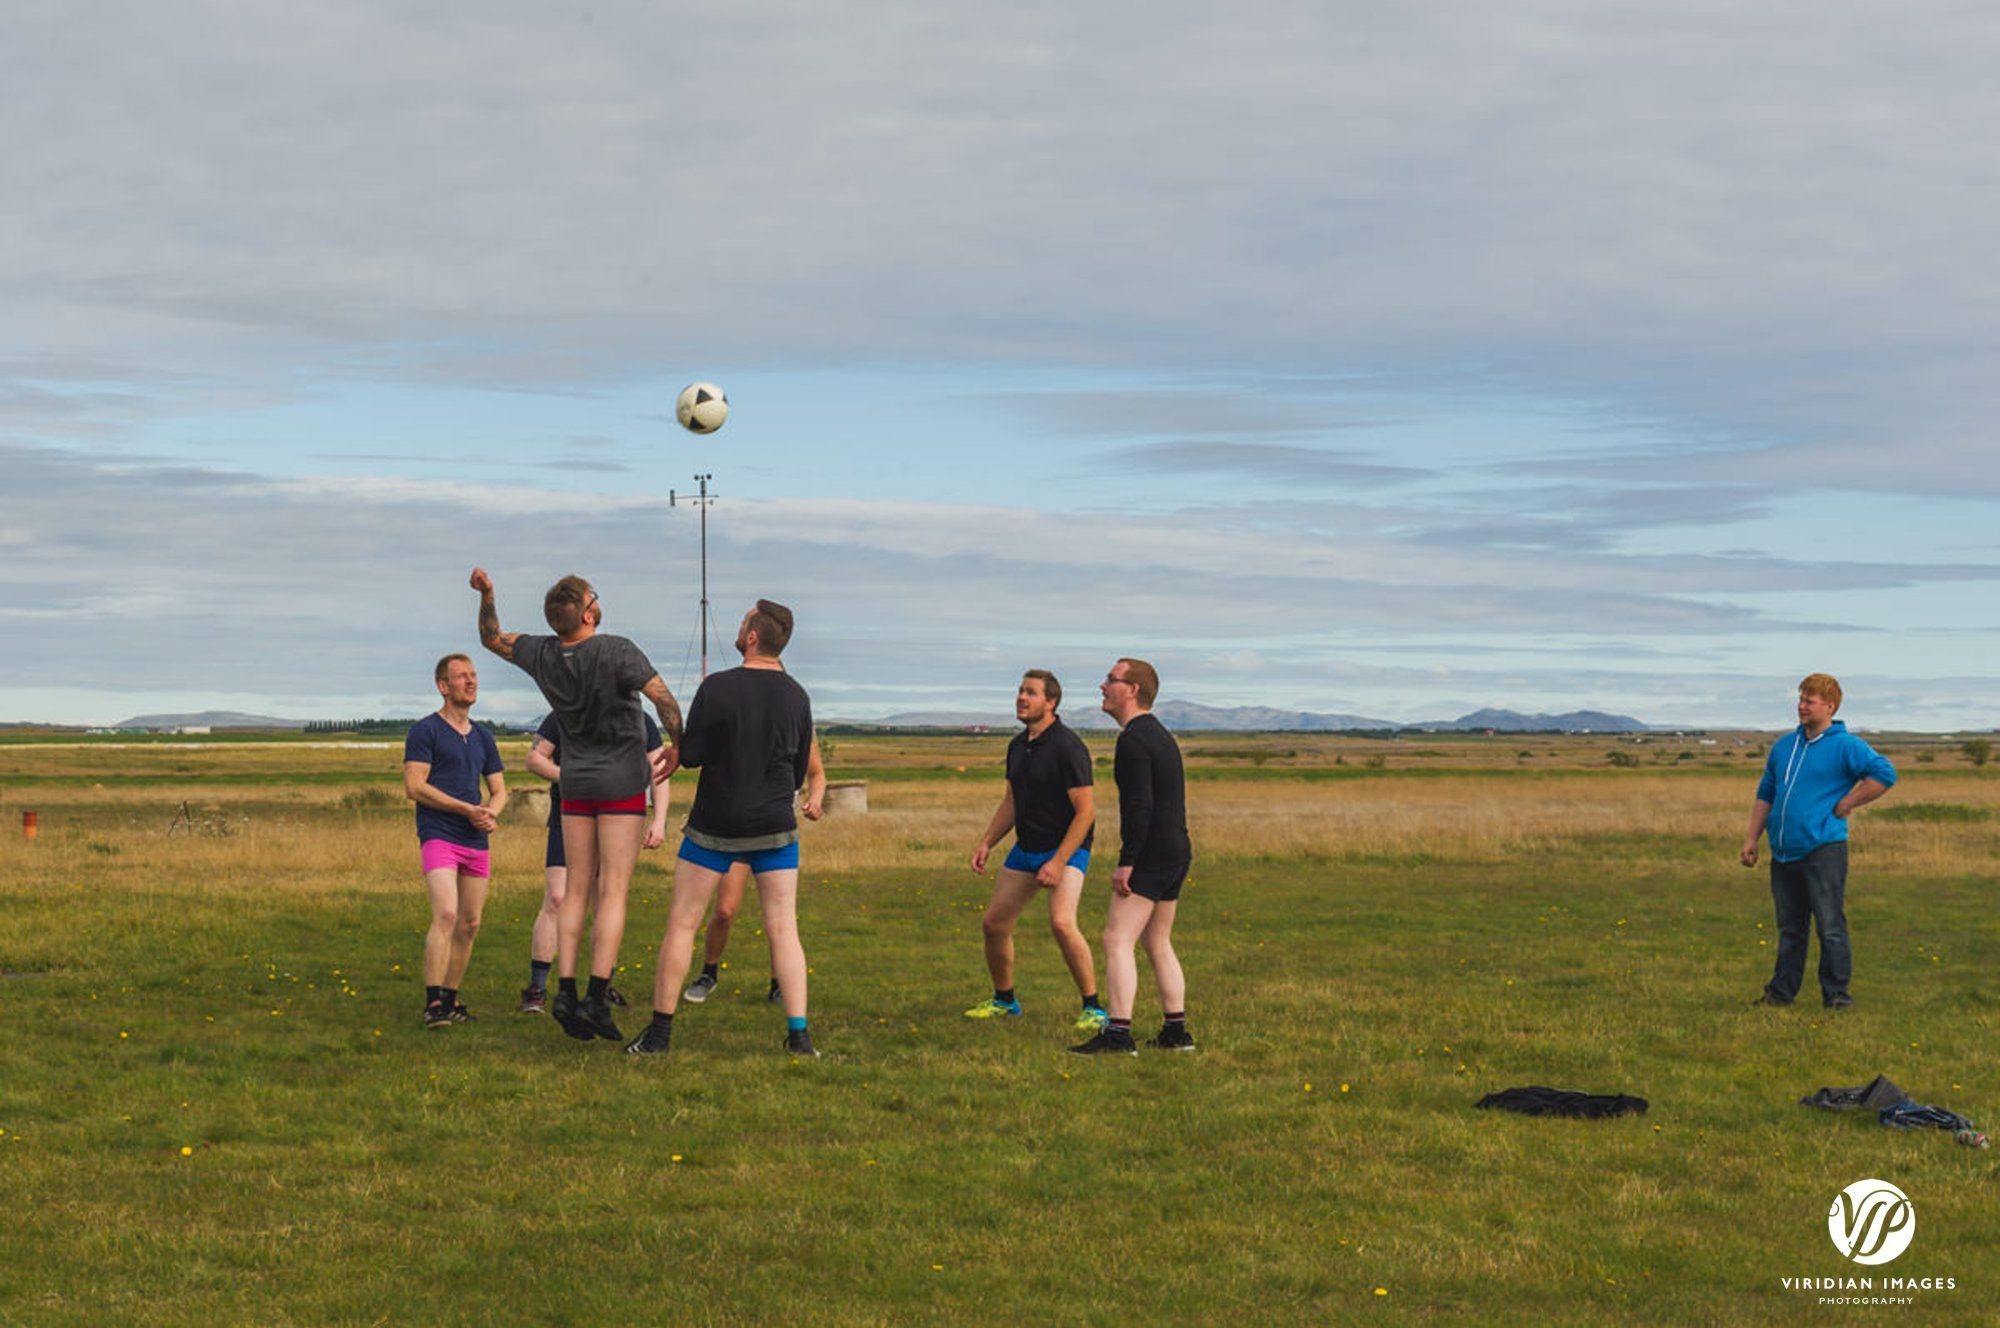 Icelandic men playing football in underwear